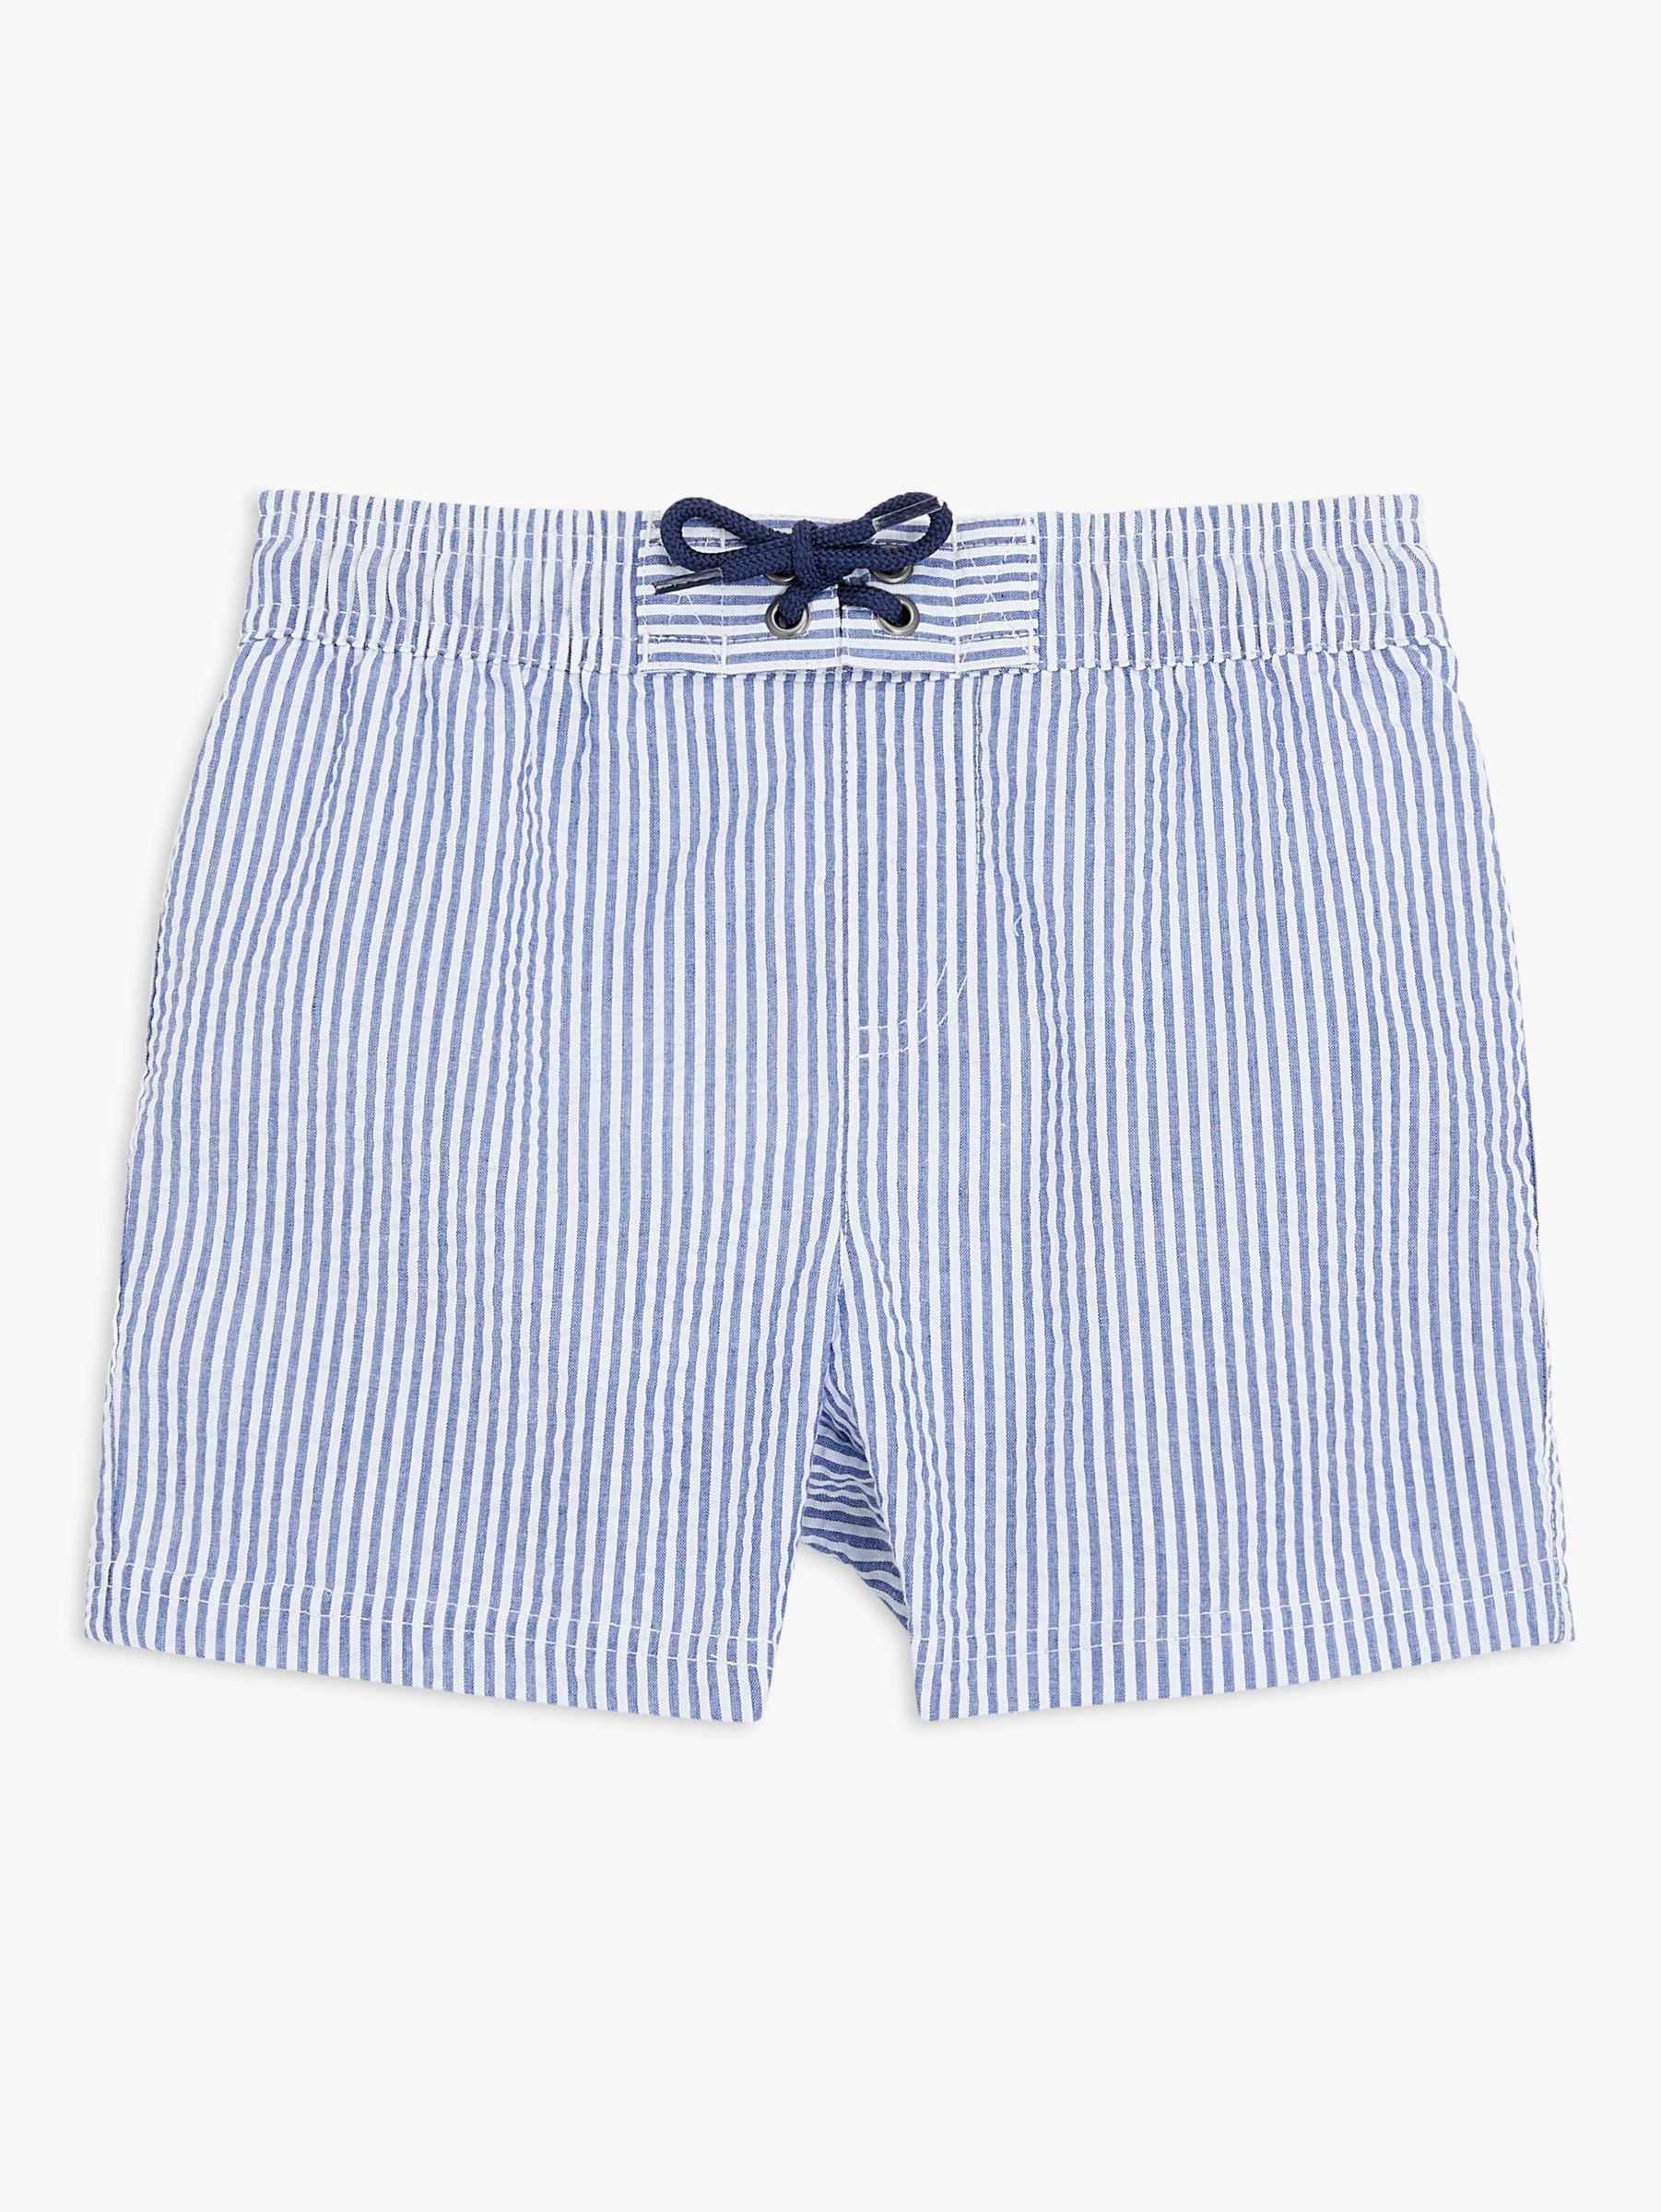 John Lewis Kids' Striped Seersucker Swim Shorts, Blue